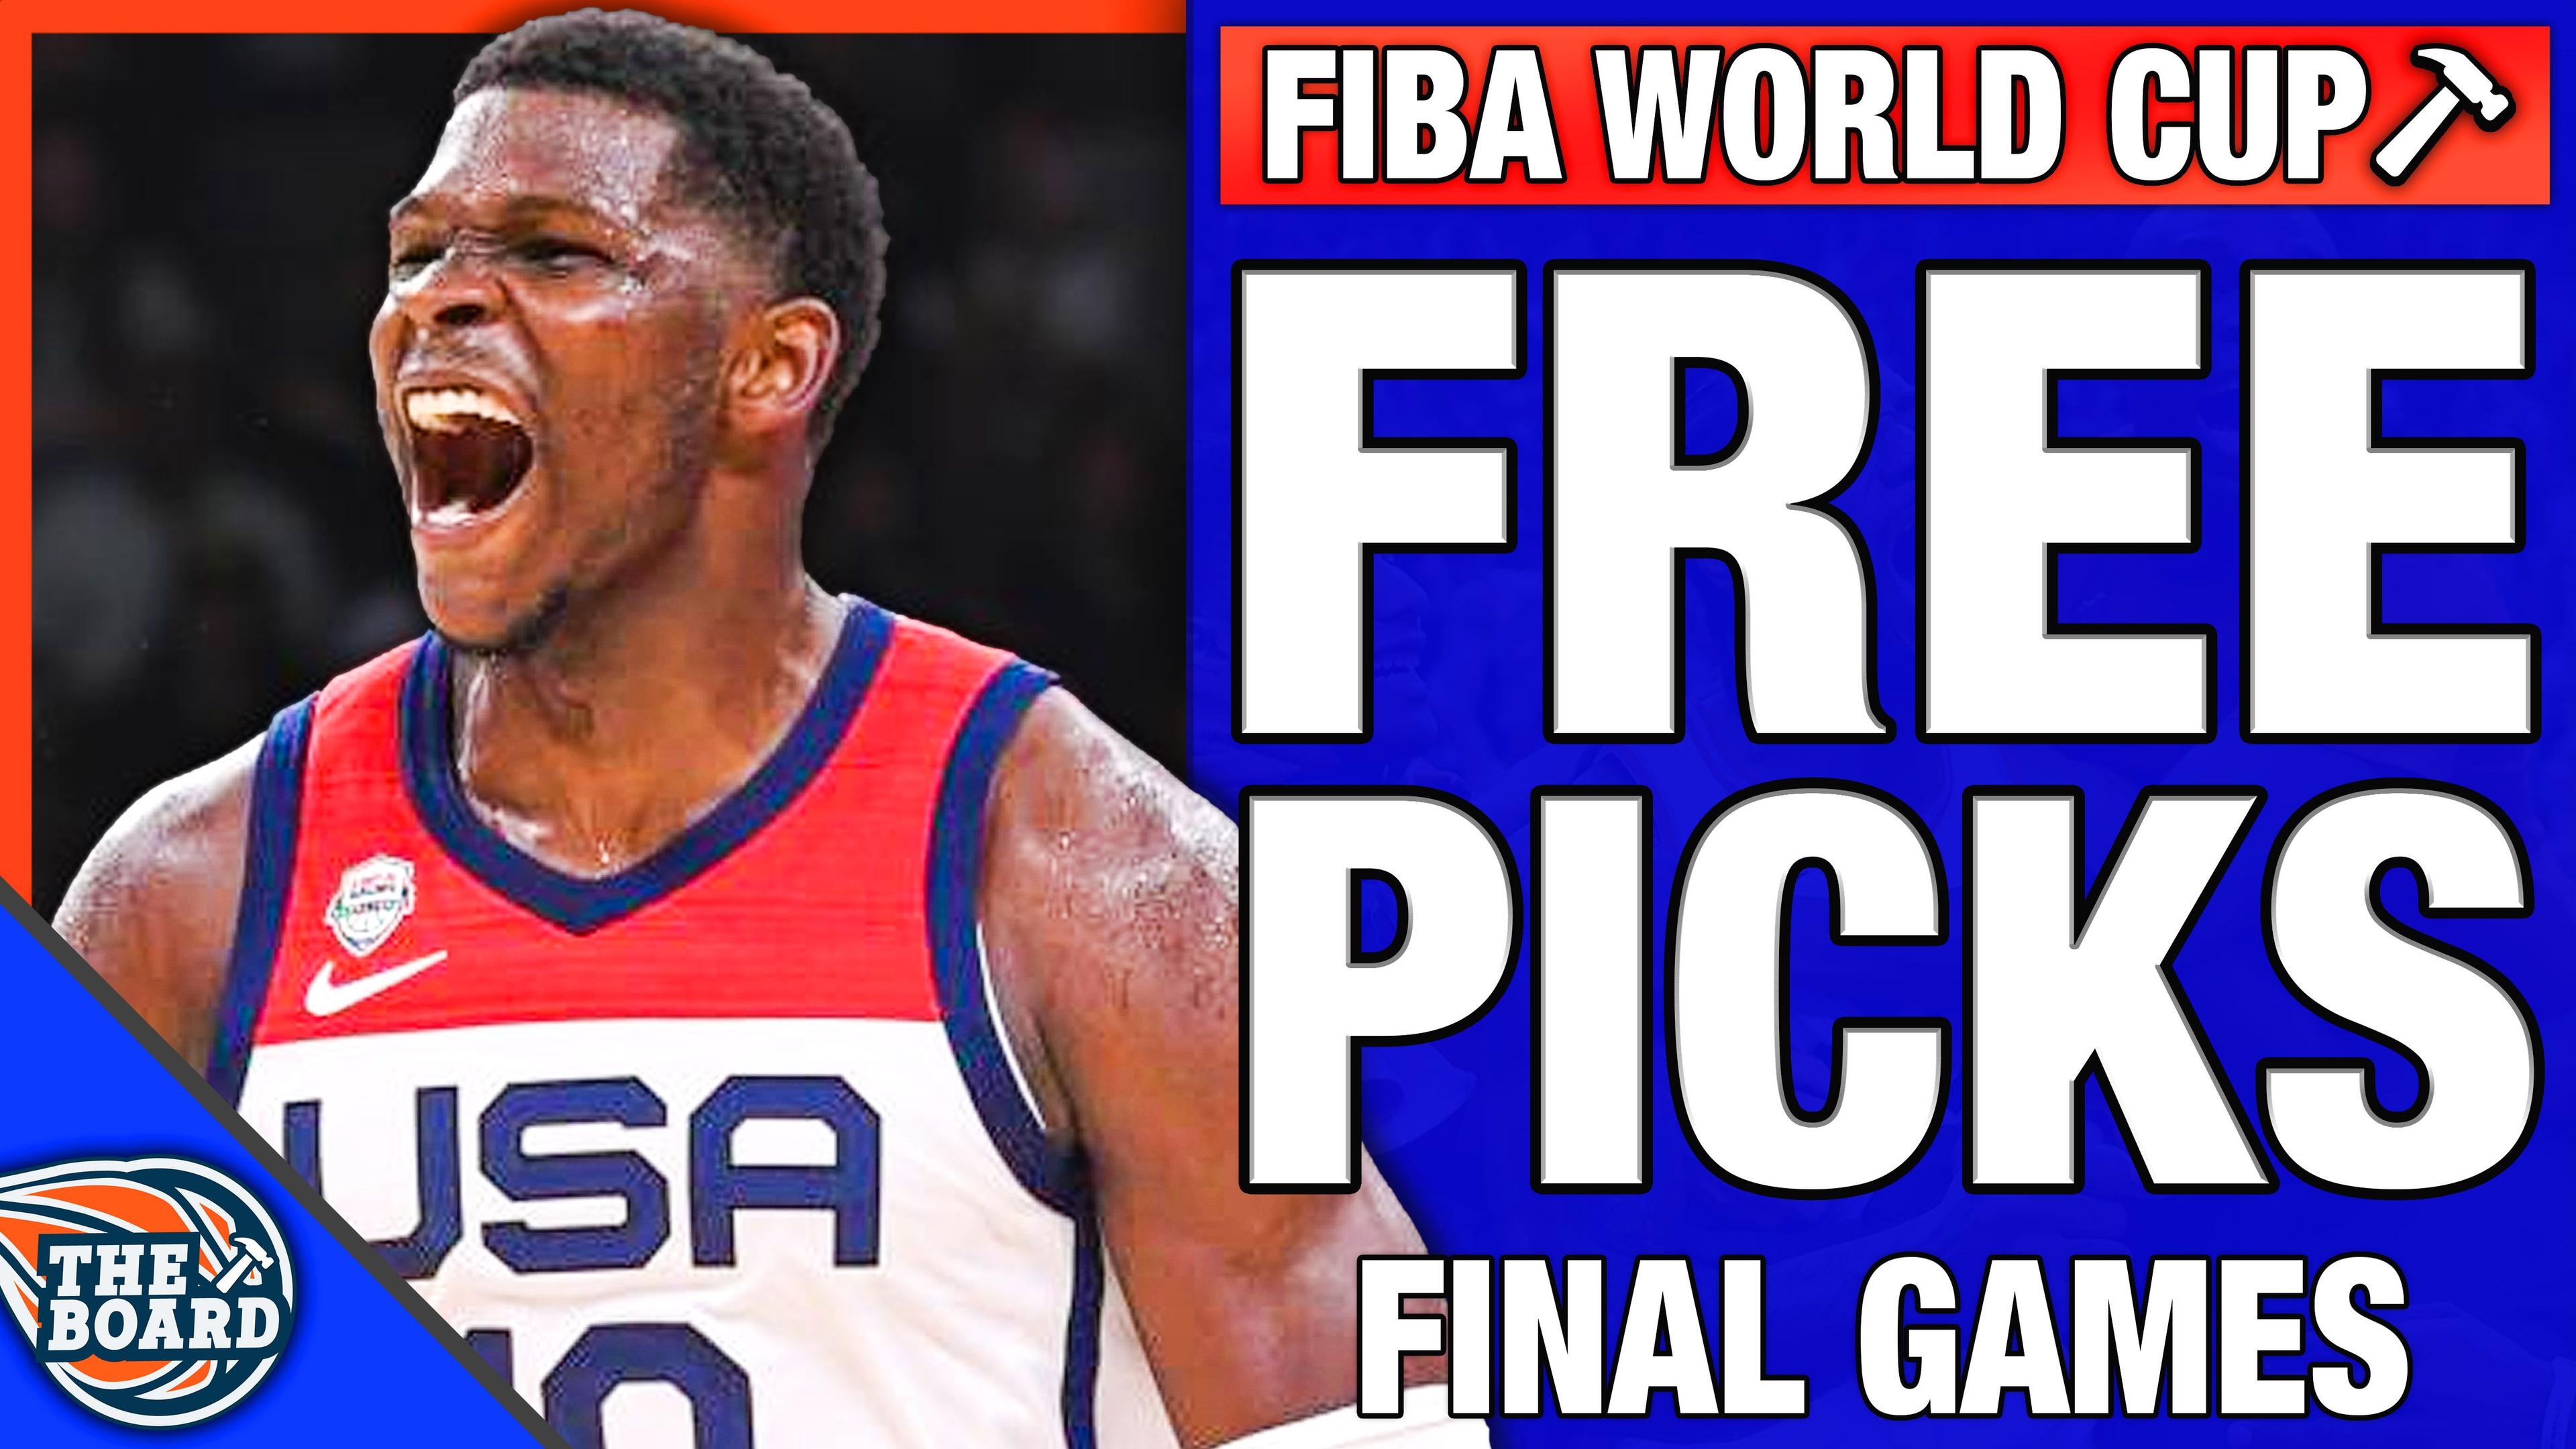 FIBA WC Final  Games Thumbnail.jpg